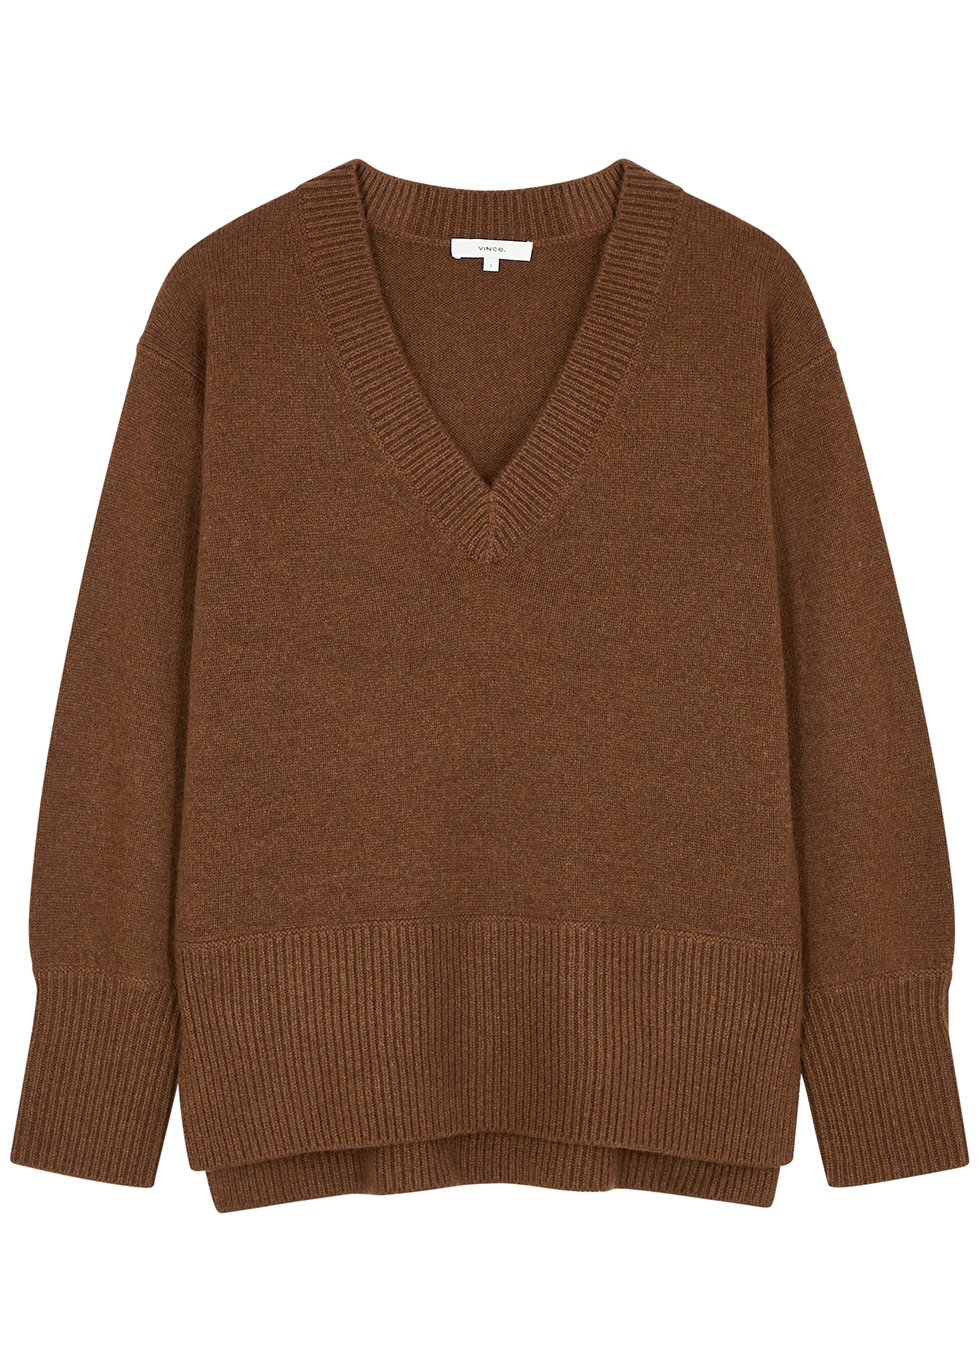 Brown cashmere jumper